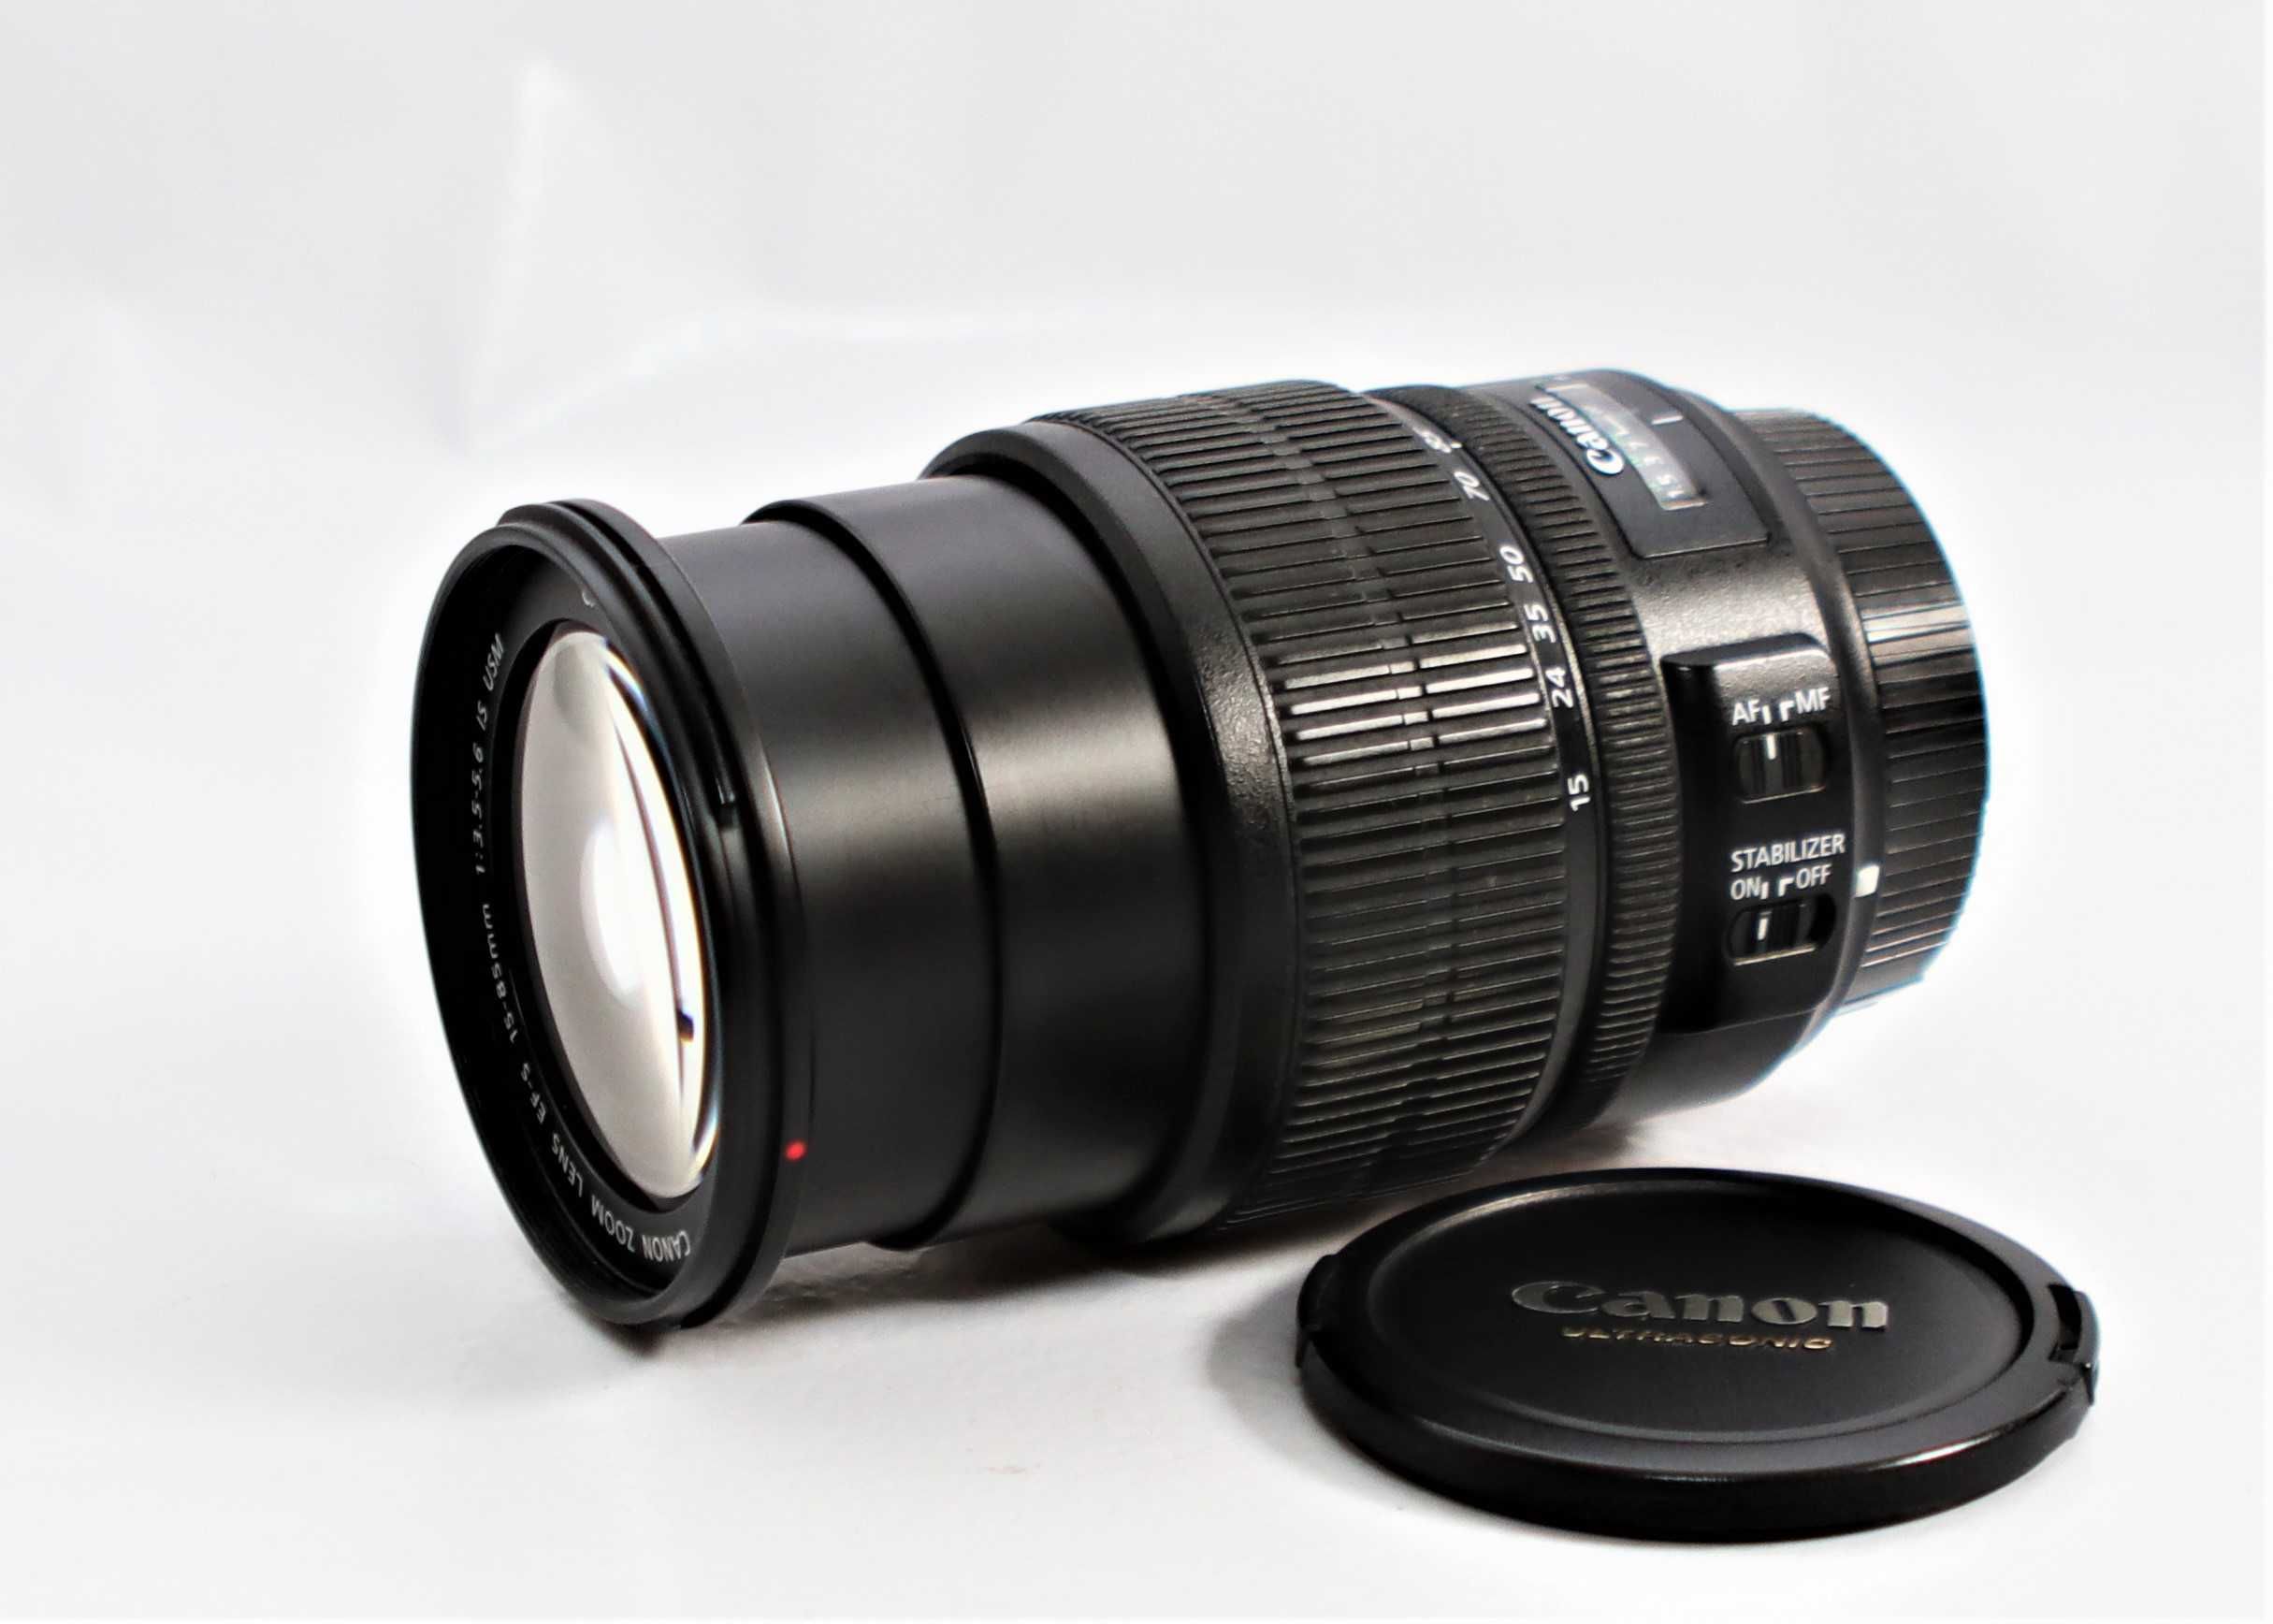 Lente Canon EF-S 15-85mm IS USM objetiva em excelente estado